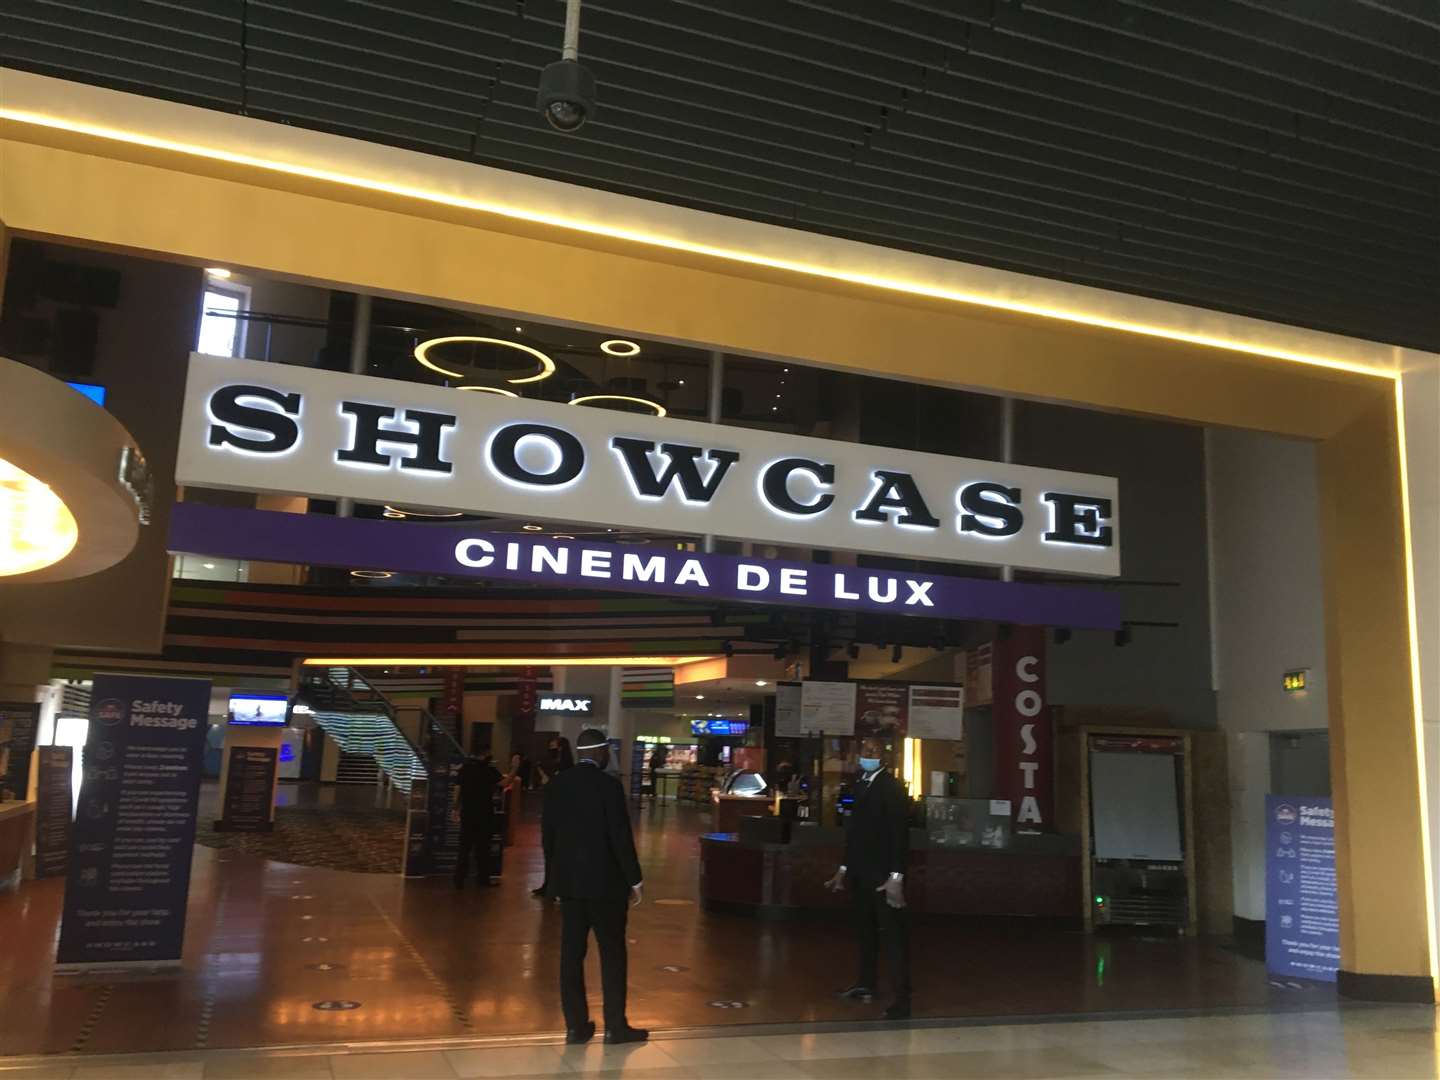 Showcase Cinema De Lux at Bluewater